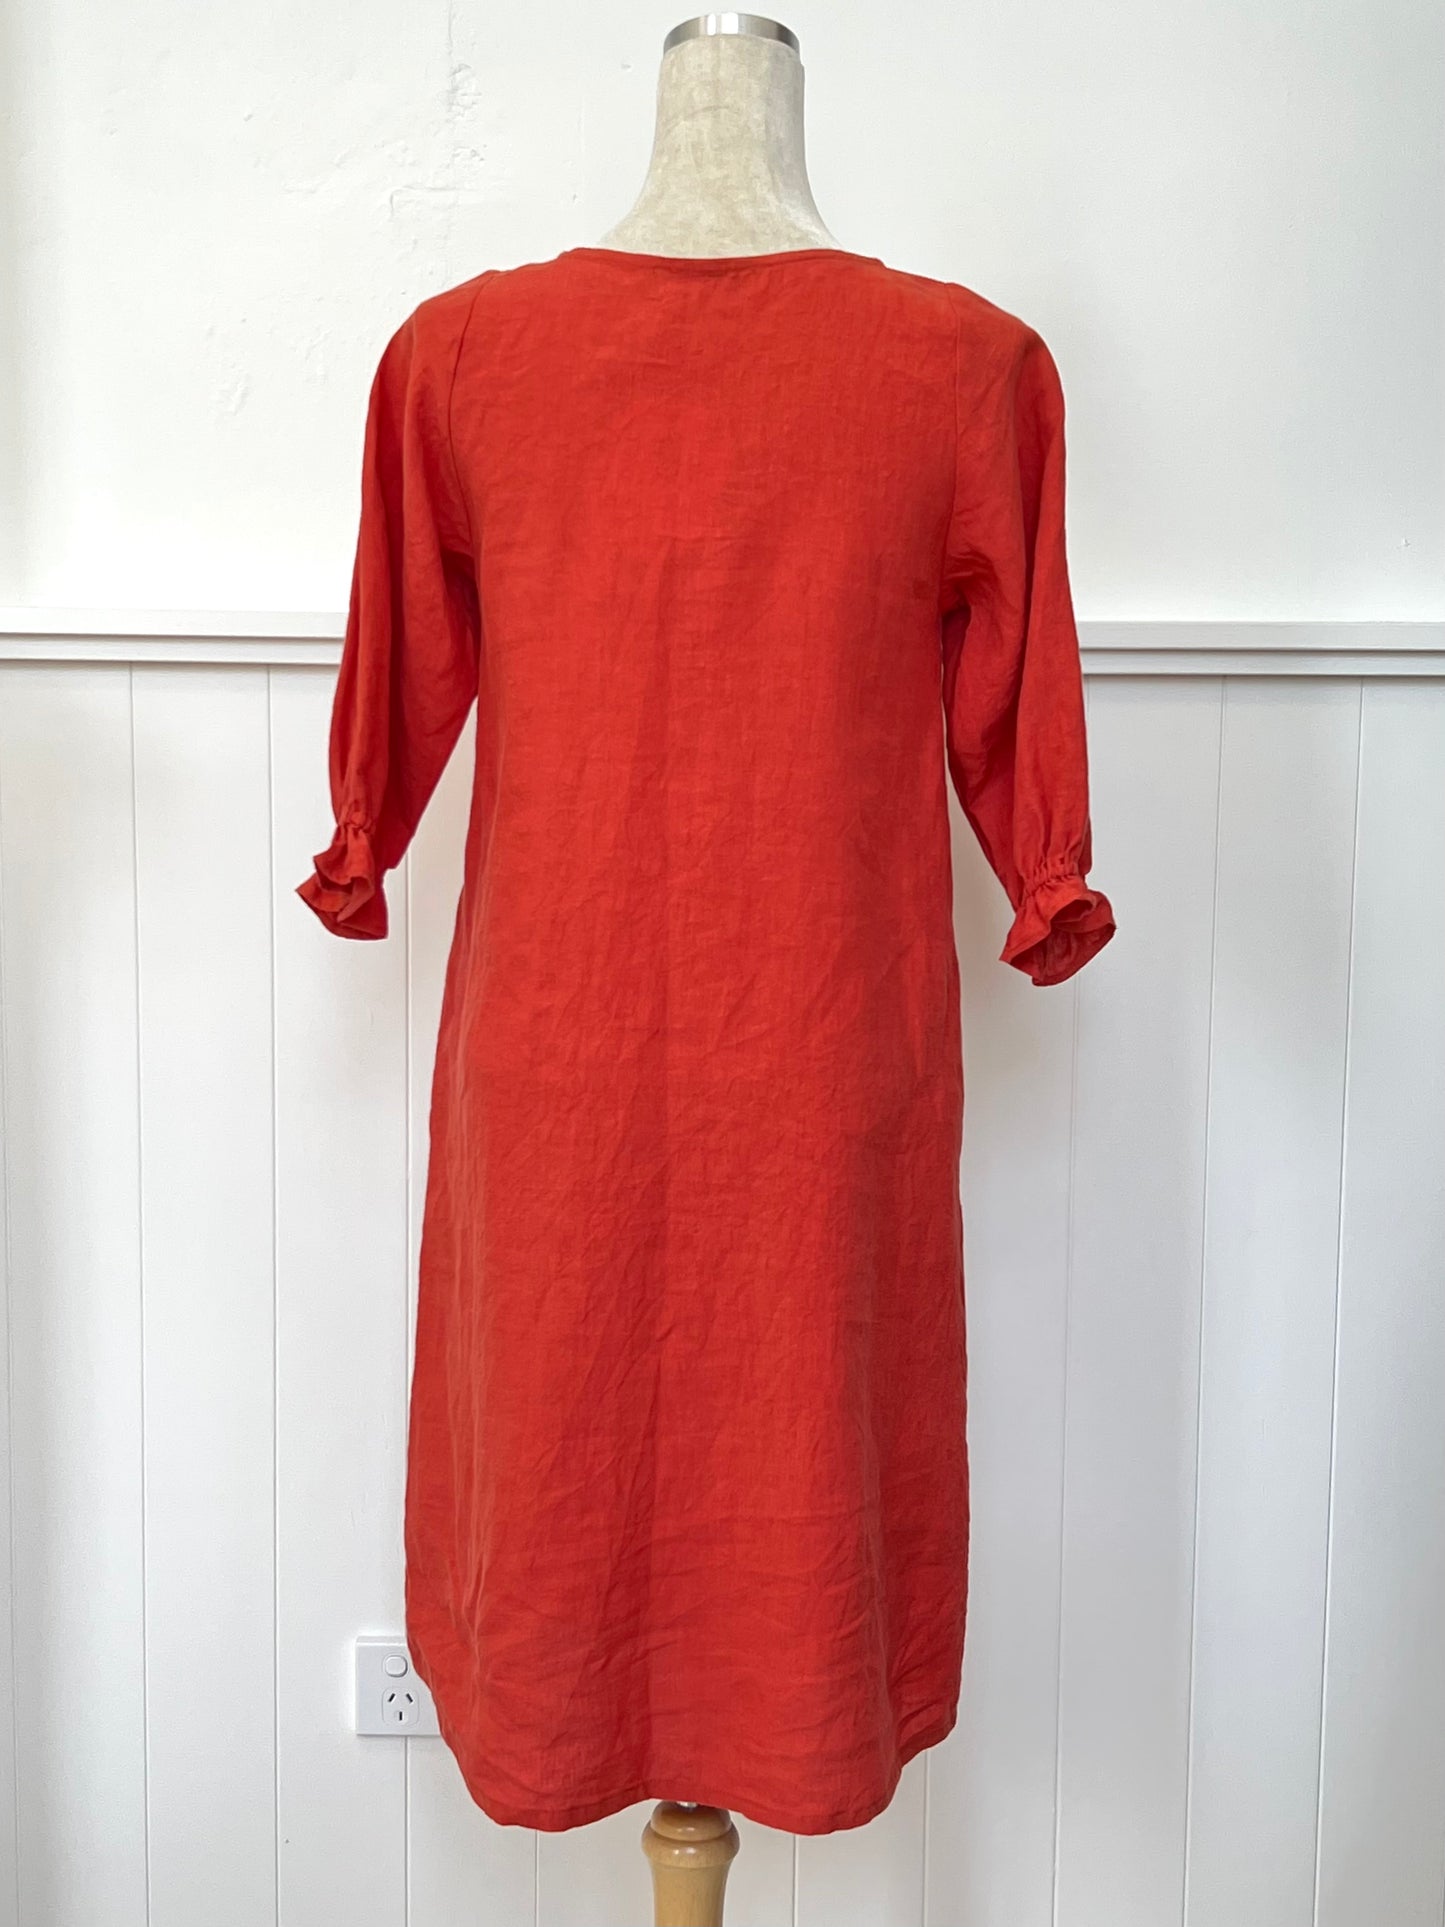 "Phoebe" Dress - Apricot Linen